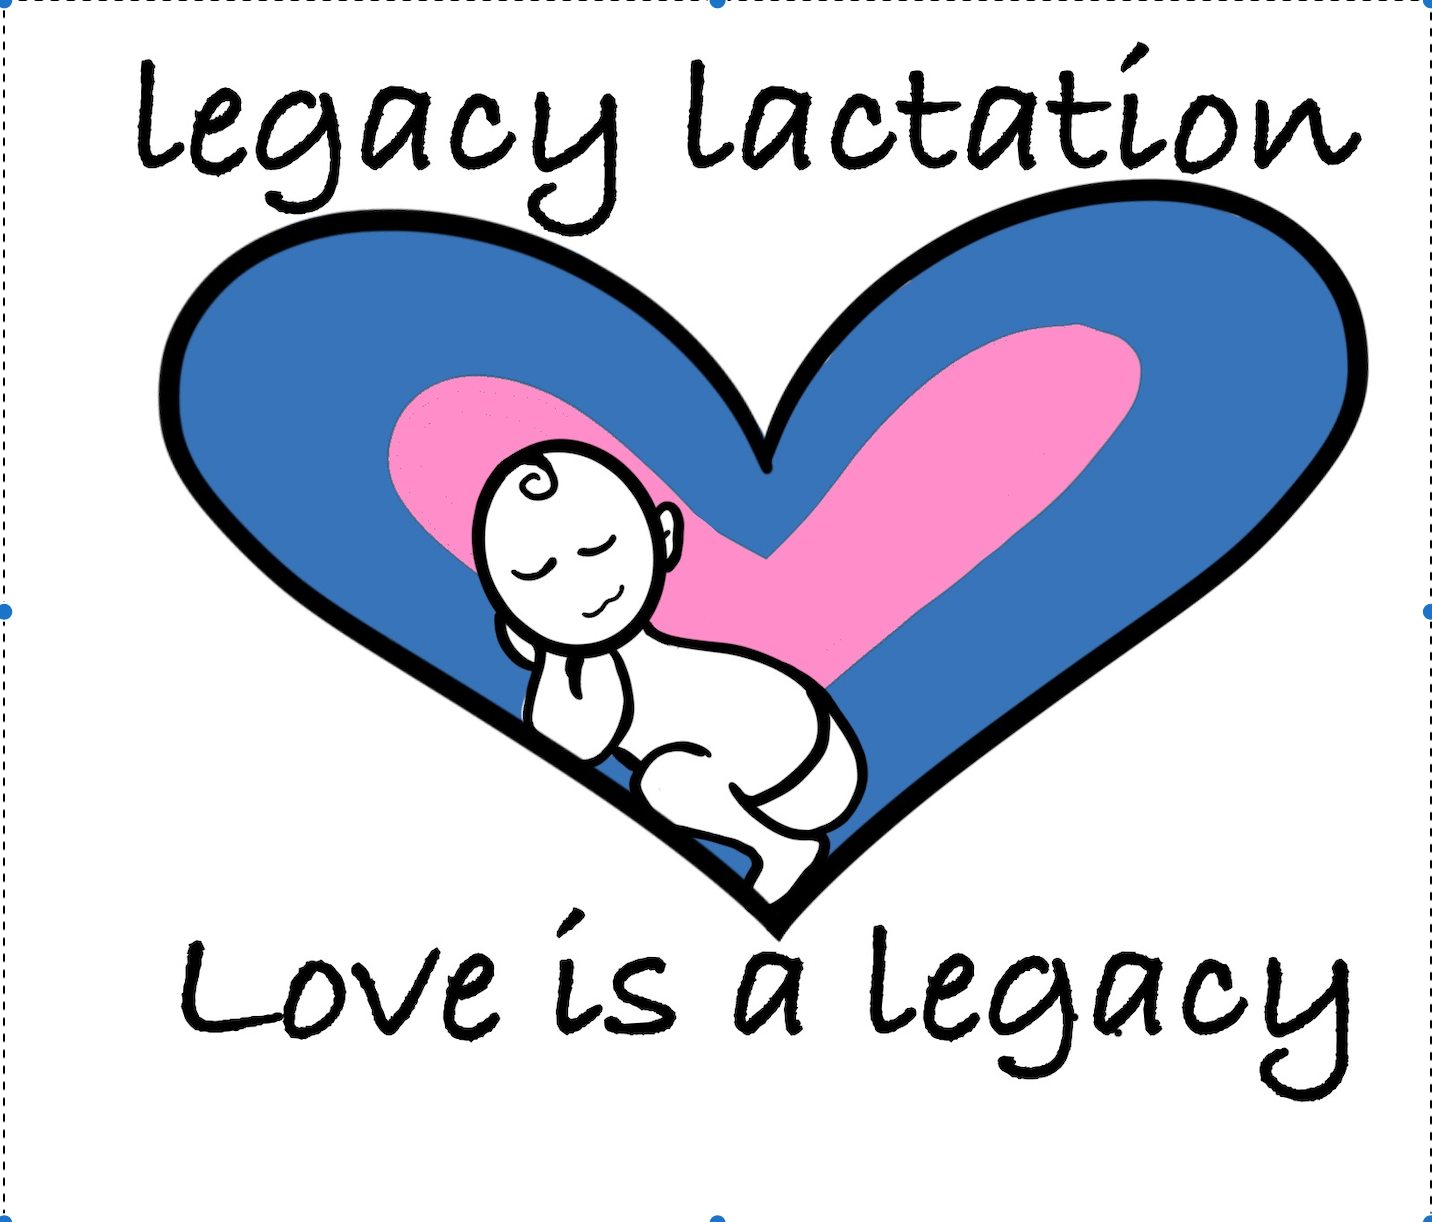 Legacy Lactation and Childbirth Education